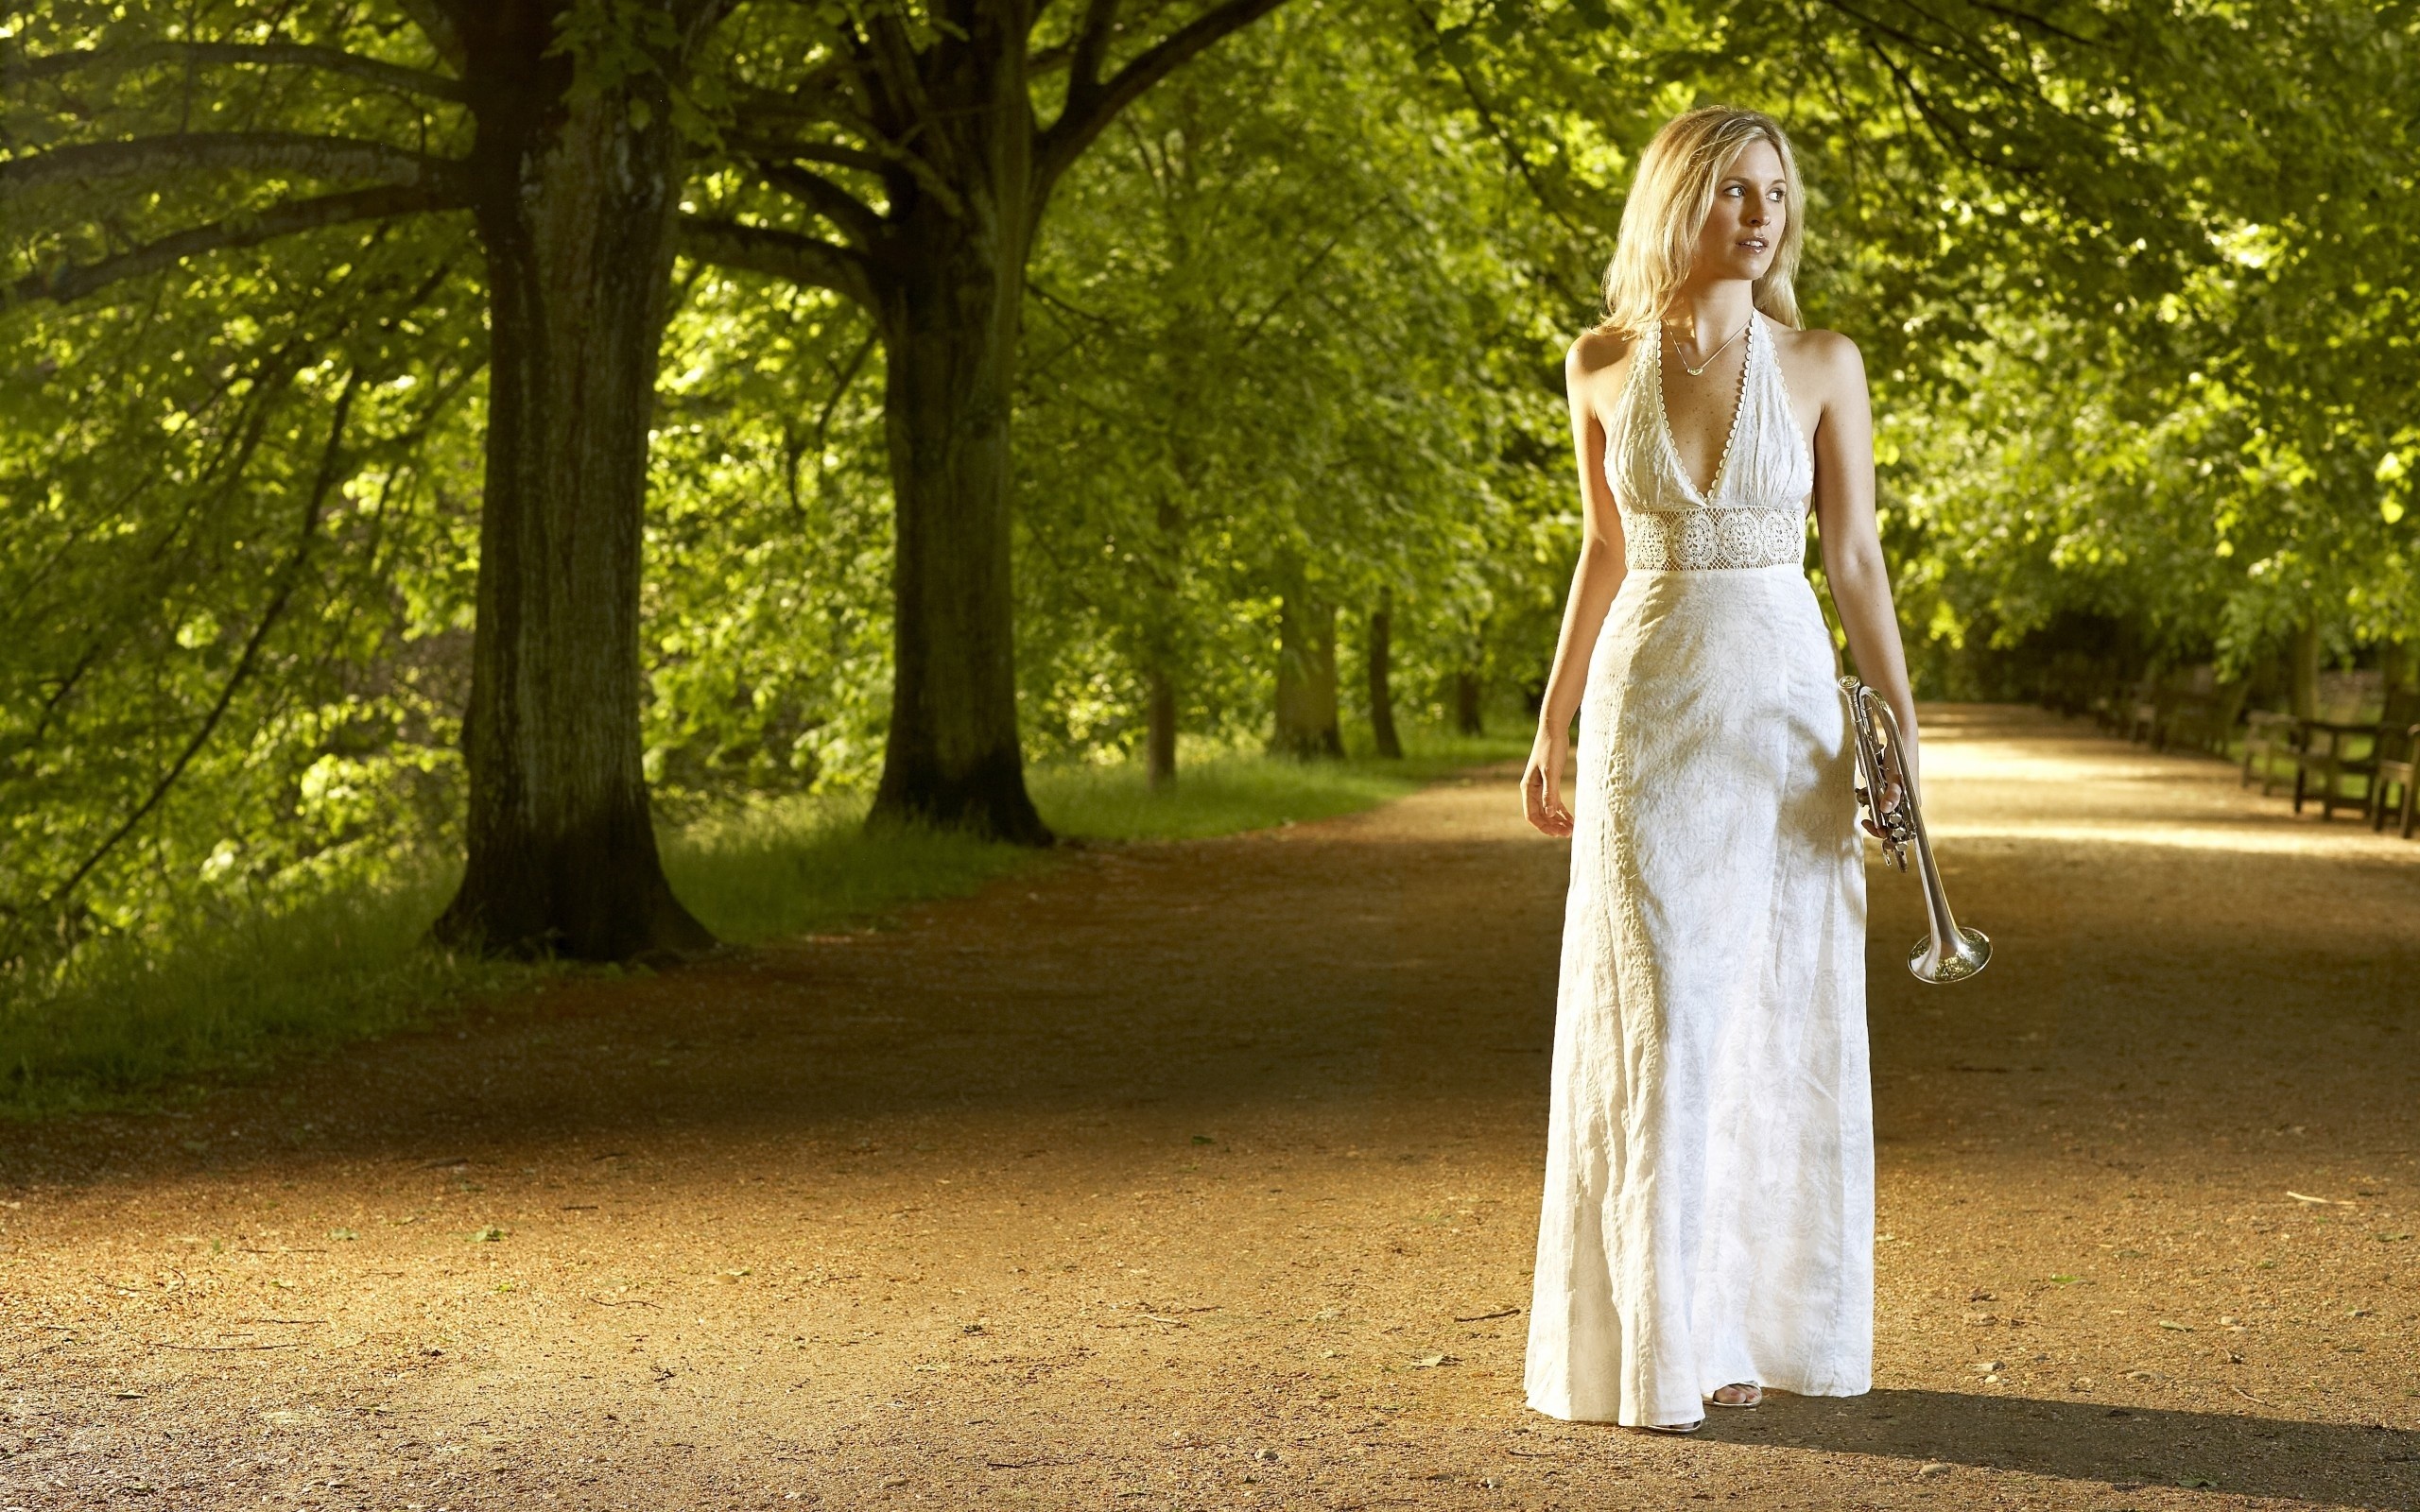 women model long hair women outdoors trees white dress park bench trumpets shadow blonde Wallpaper